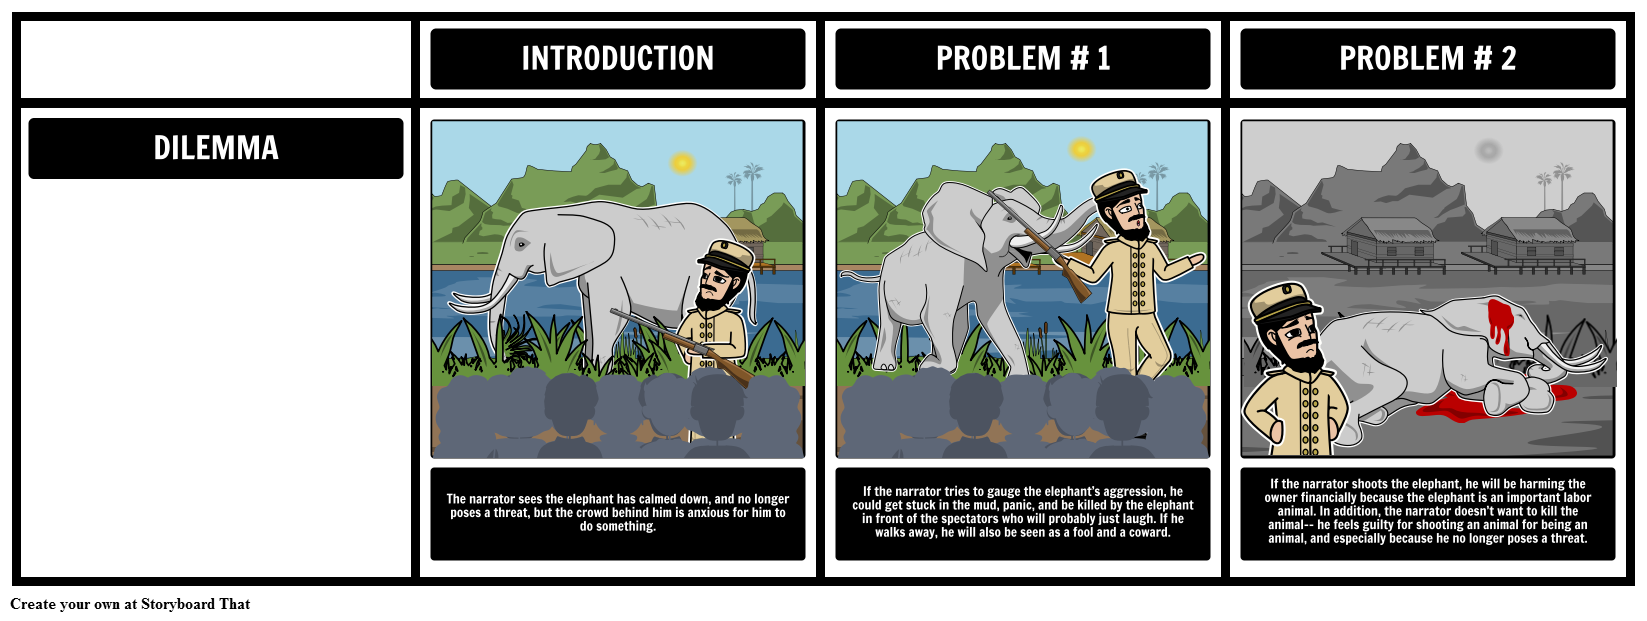 Narrator's Dilemma in "Shooting An Elephant"